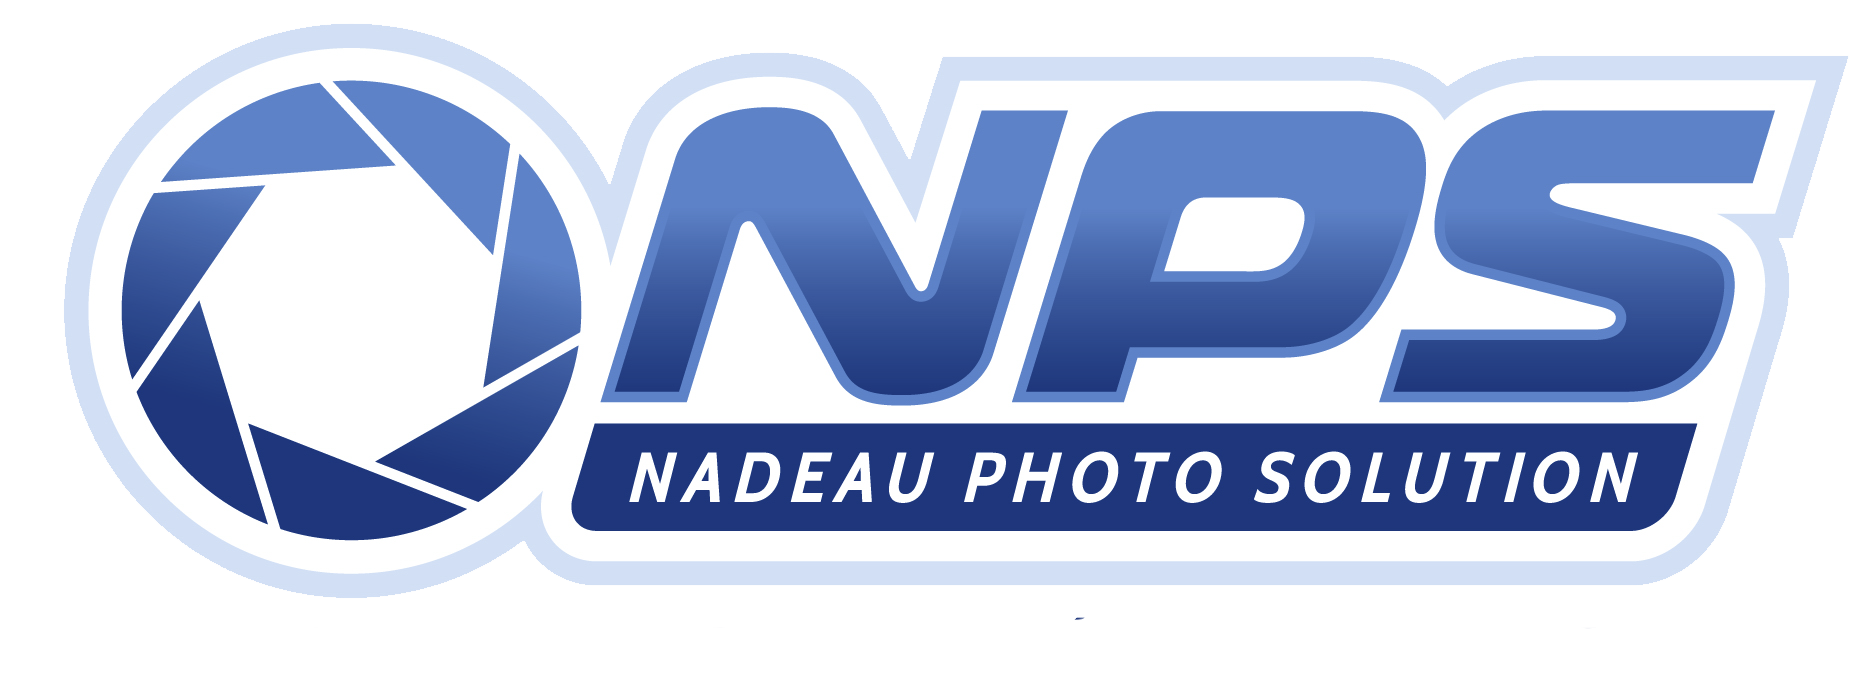 Nadeau Photo Solution